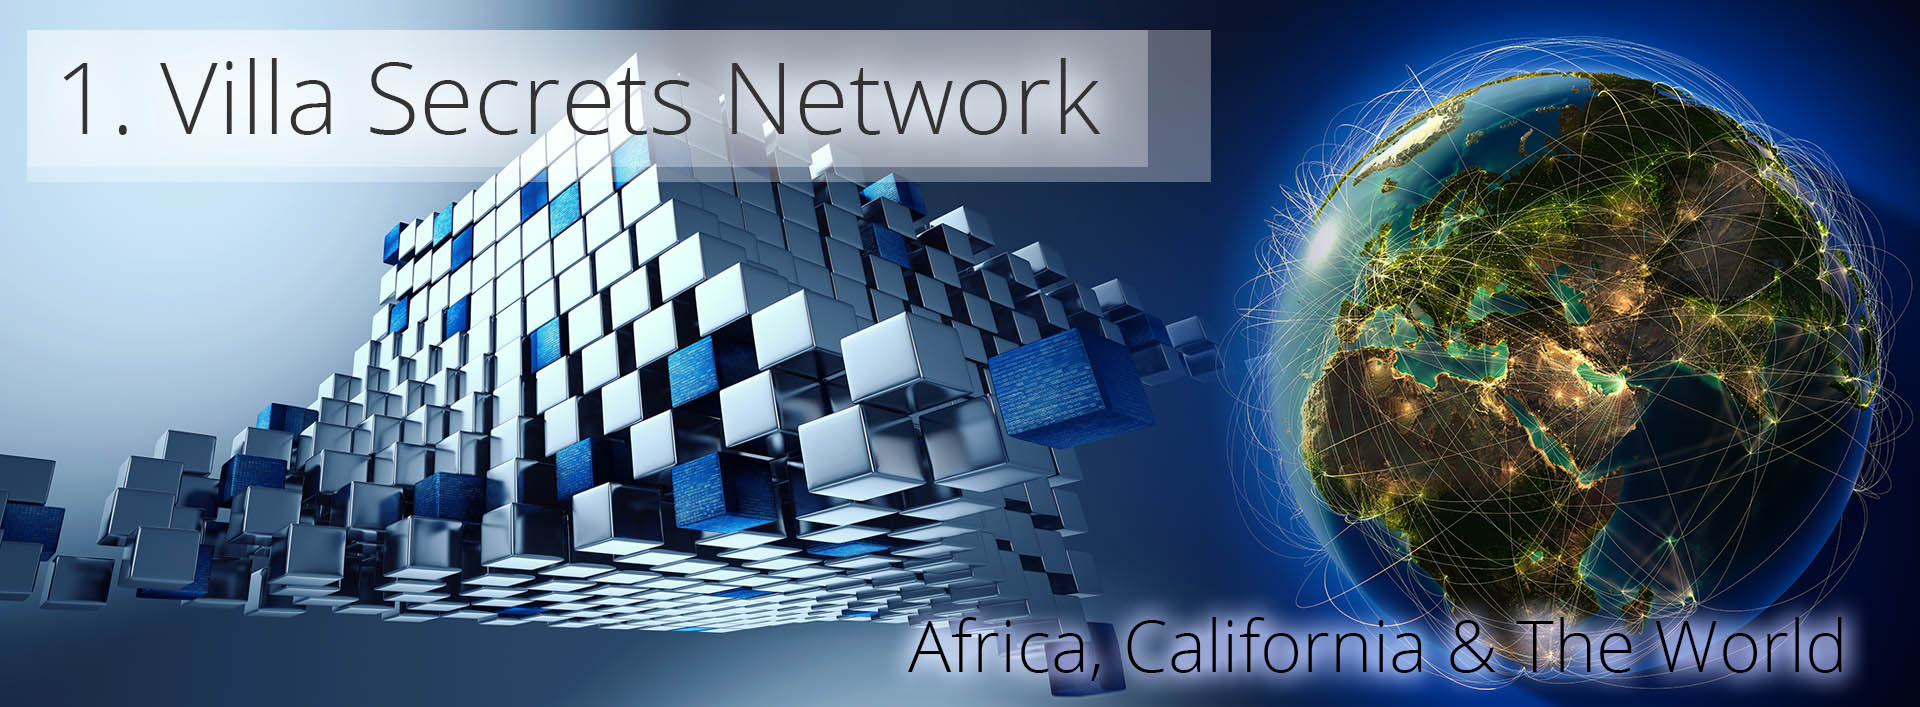 Villa-Secrets-Network-Africa-California-The-World